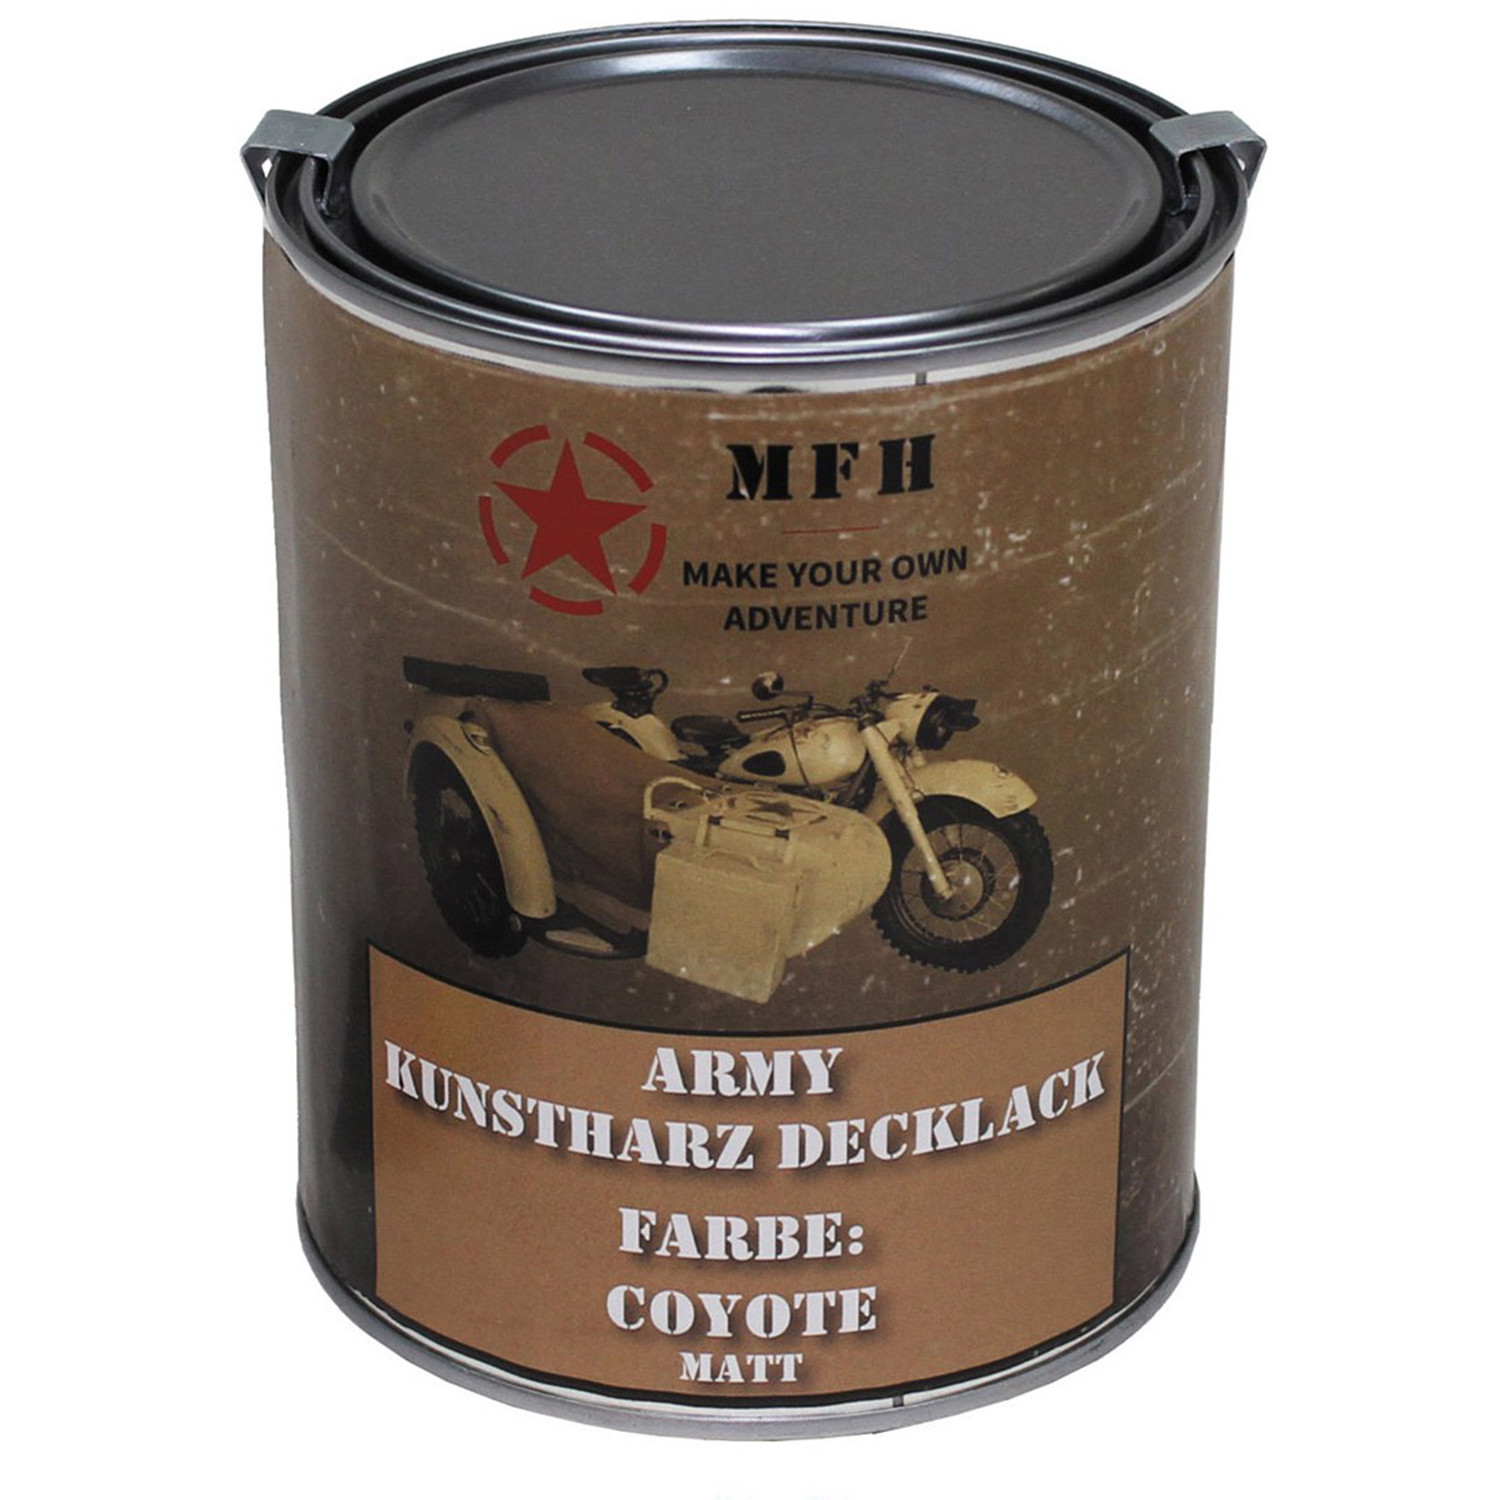 Army Kunstharz Decklack 1 Liter in Coyote, matt (RAL 1011)